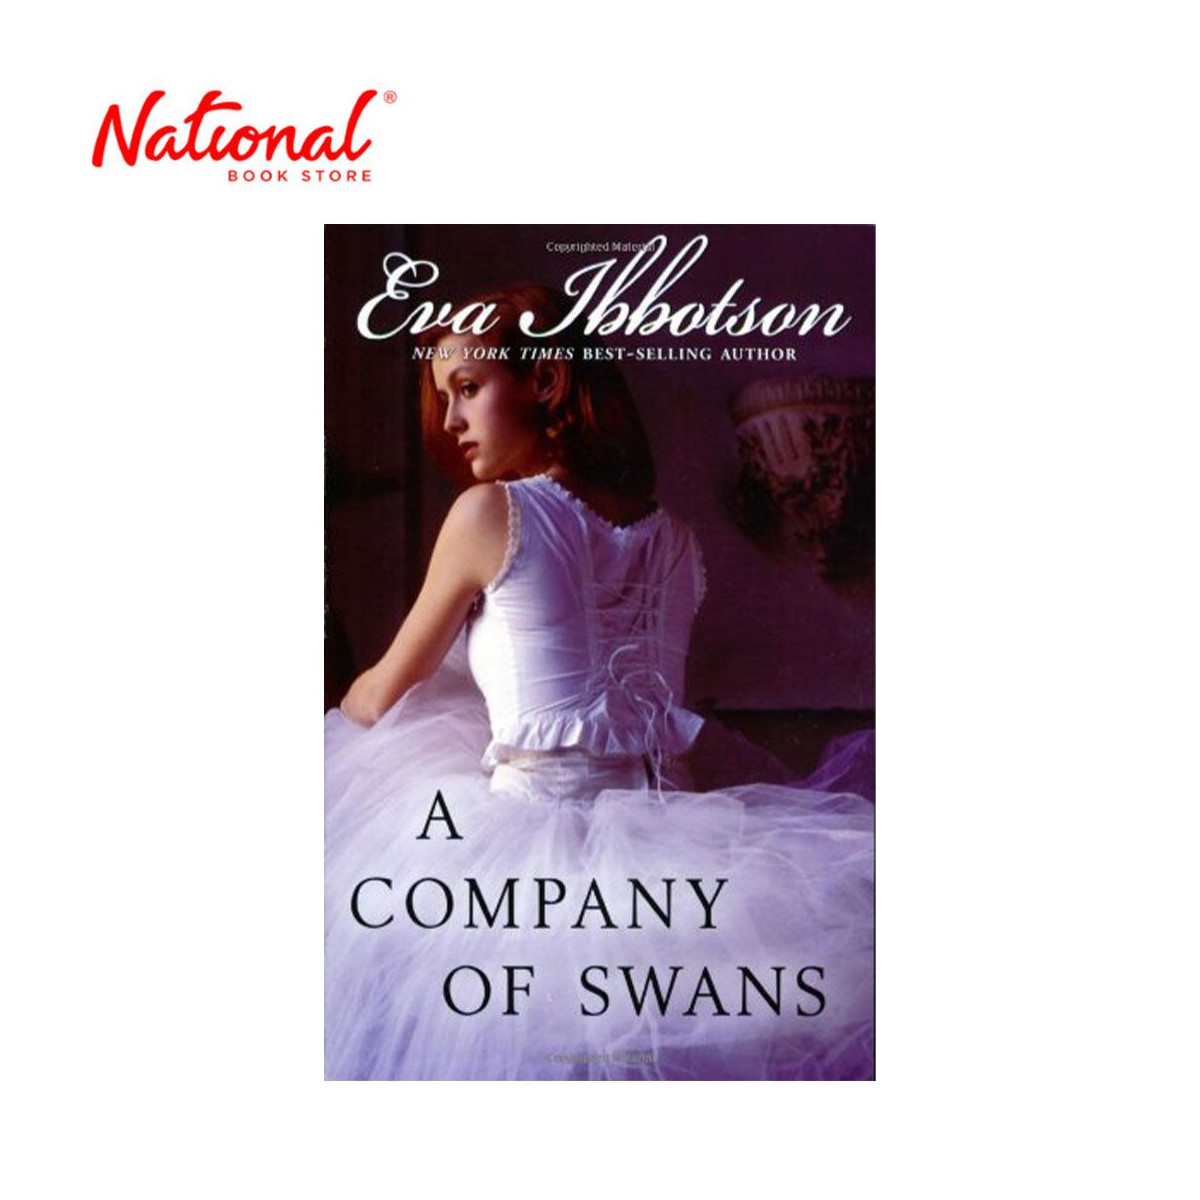 A Company of Swans by Eva Ibbotson - Trade Paperback - Teens Fiction